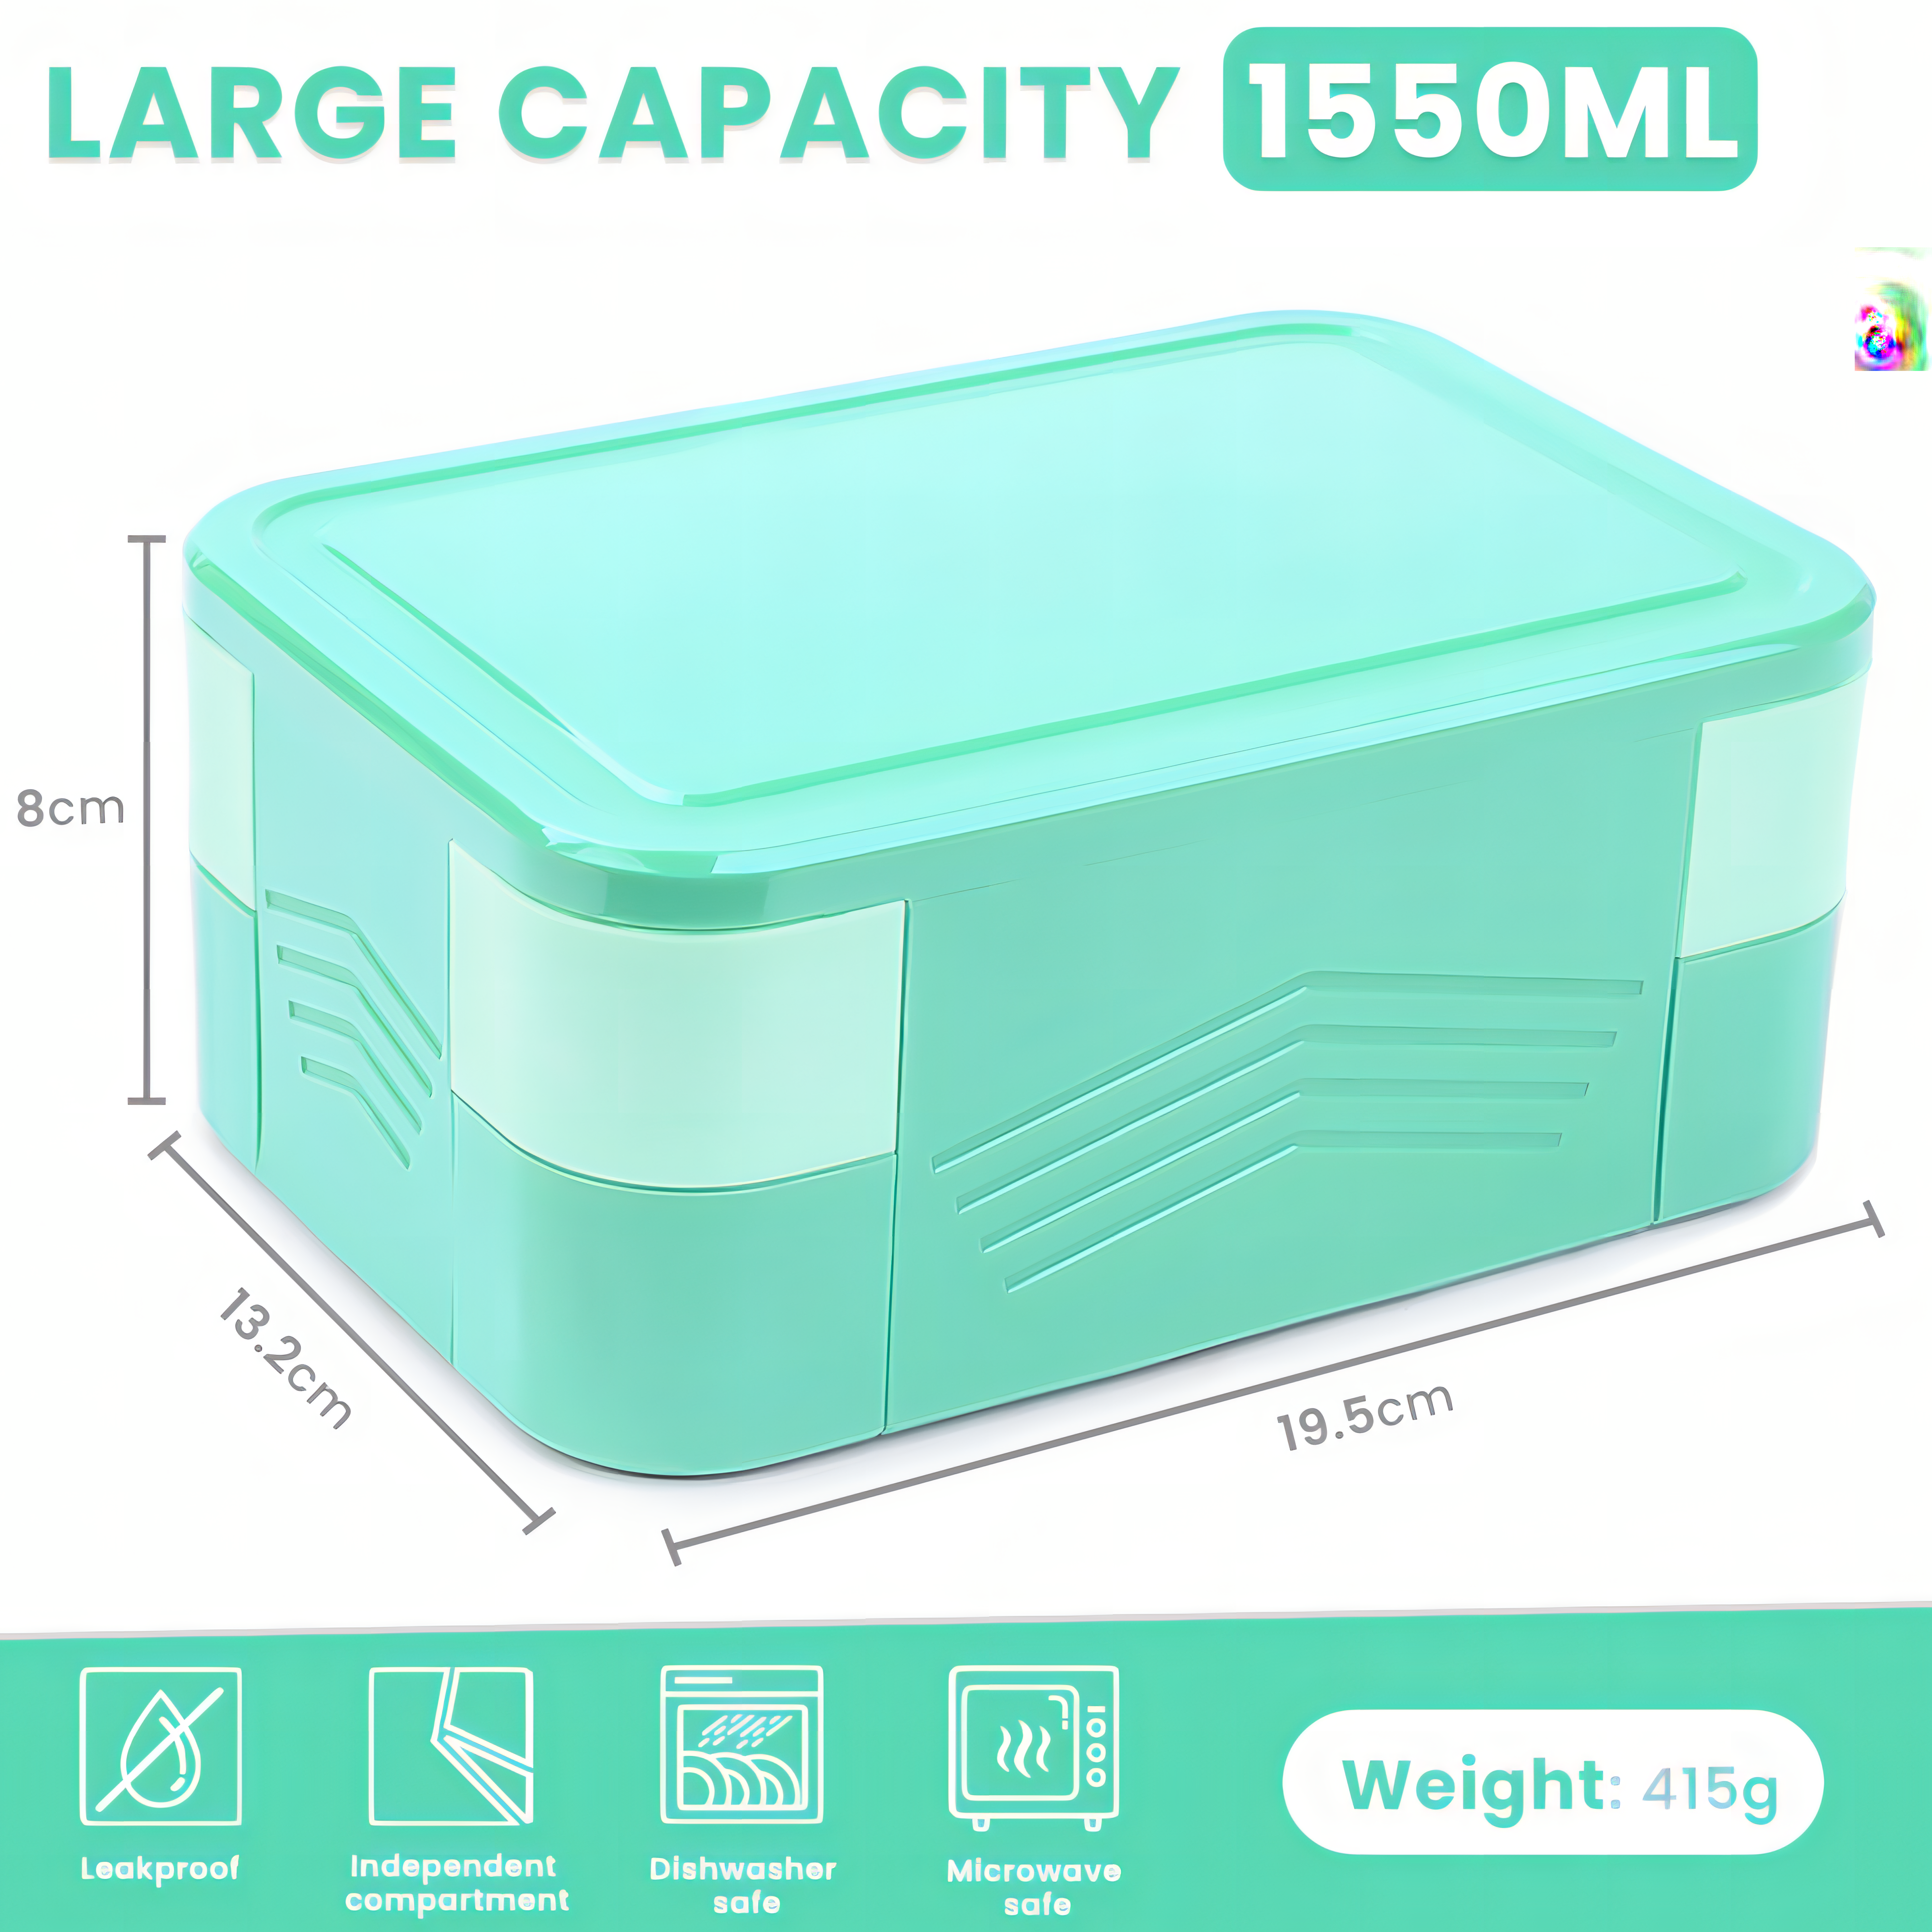 Bento Box Adult Lunch Box, Leak-Proof, BPA-Free Stacking Bento Box